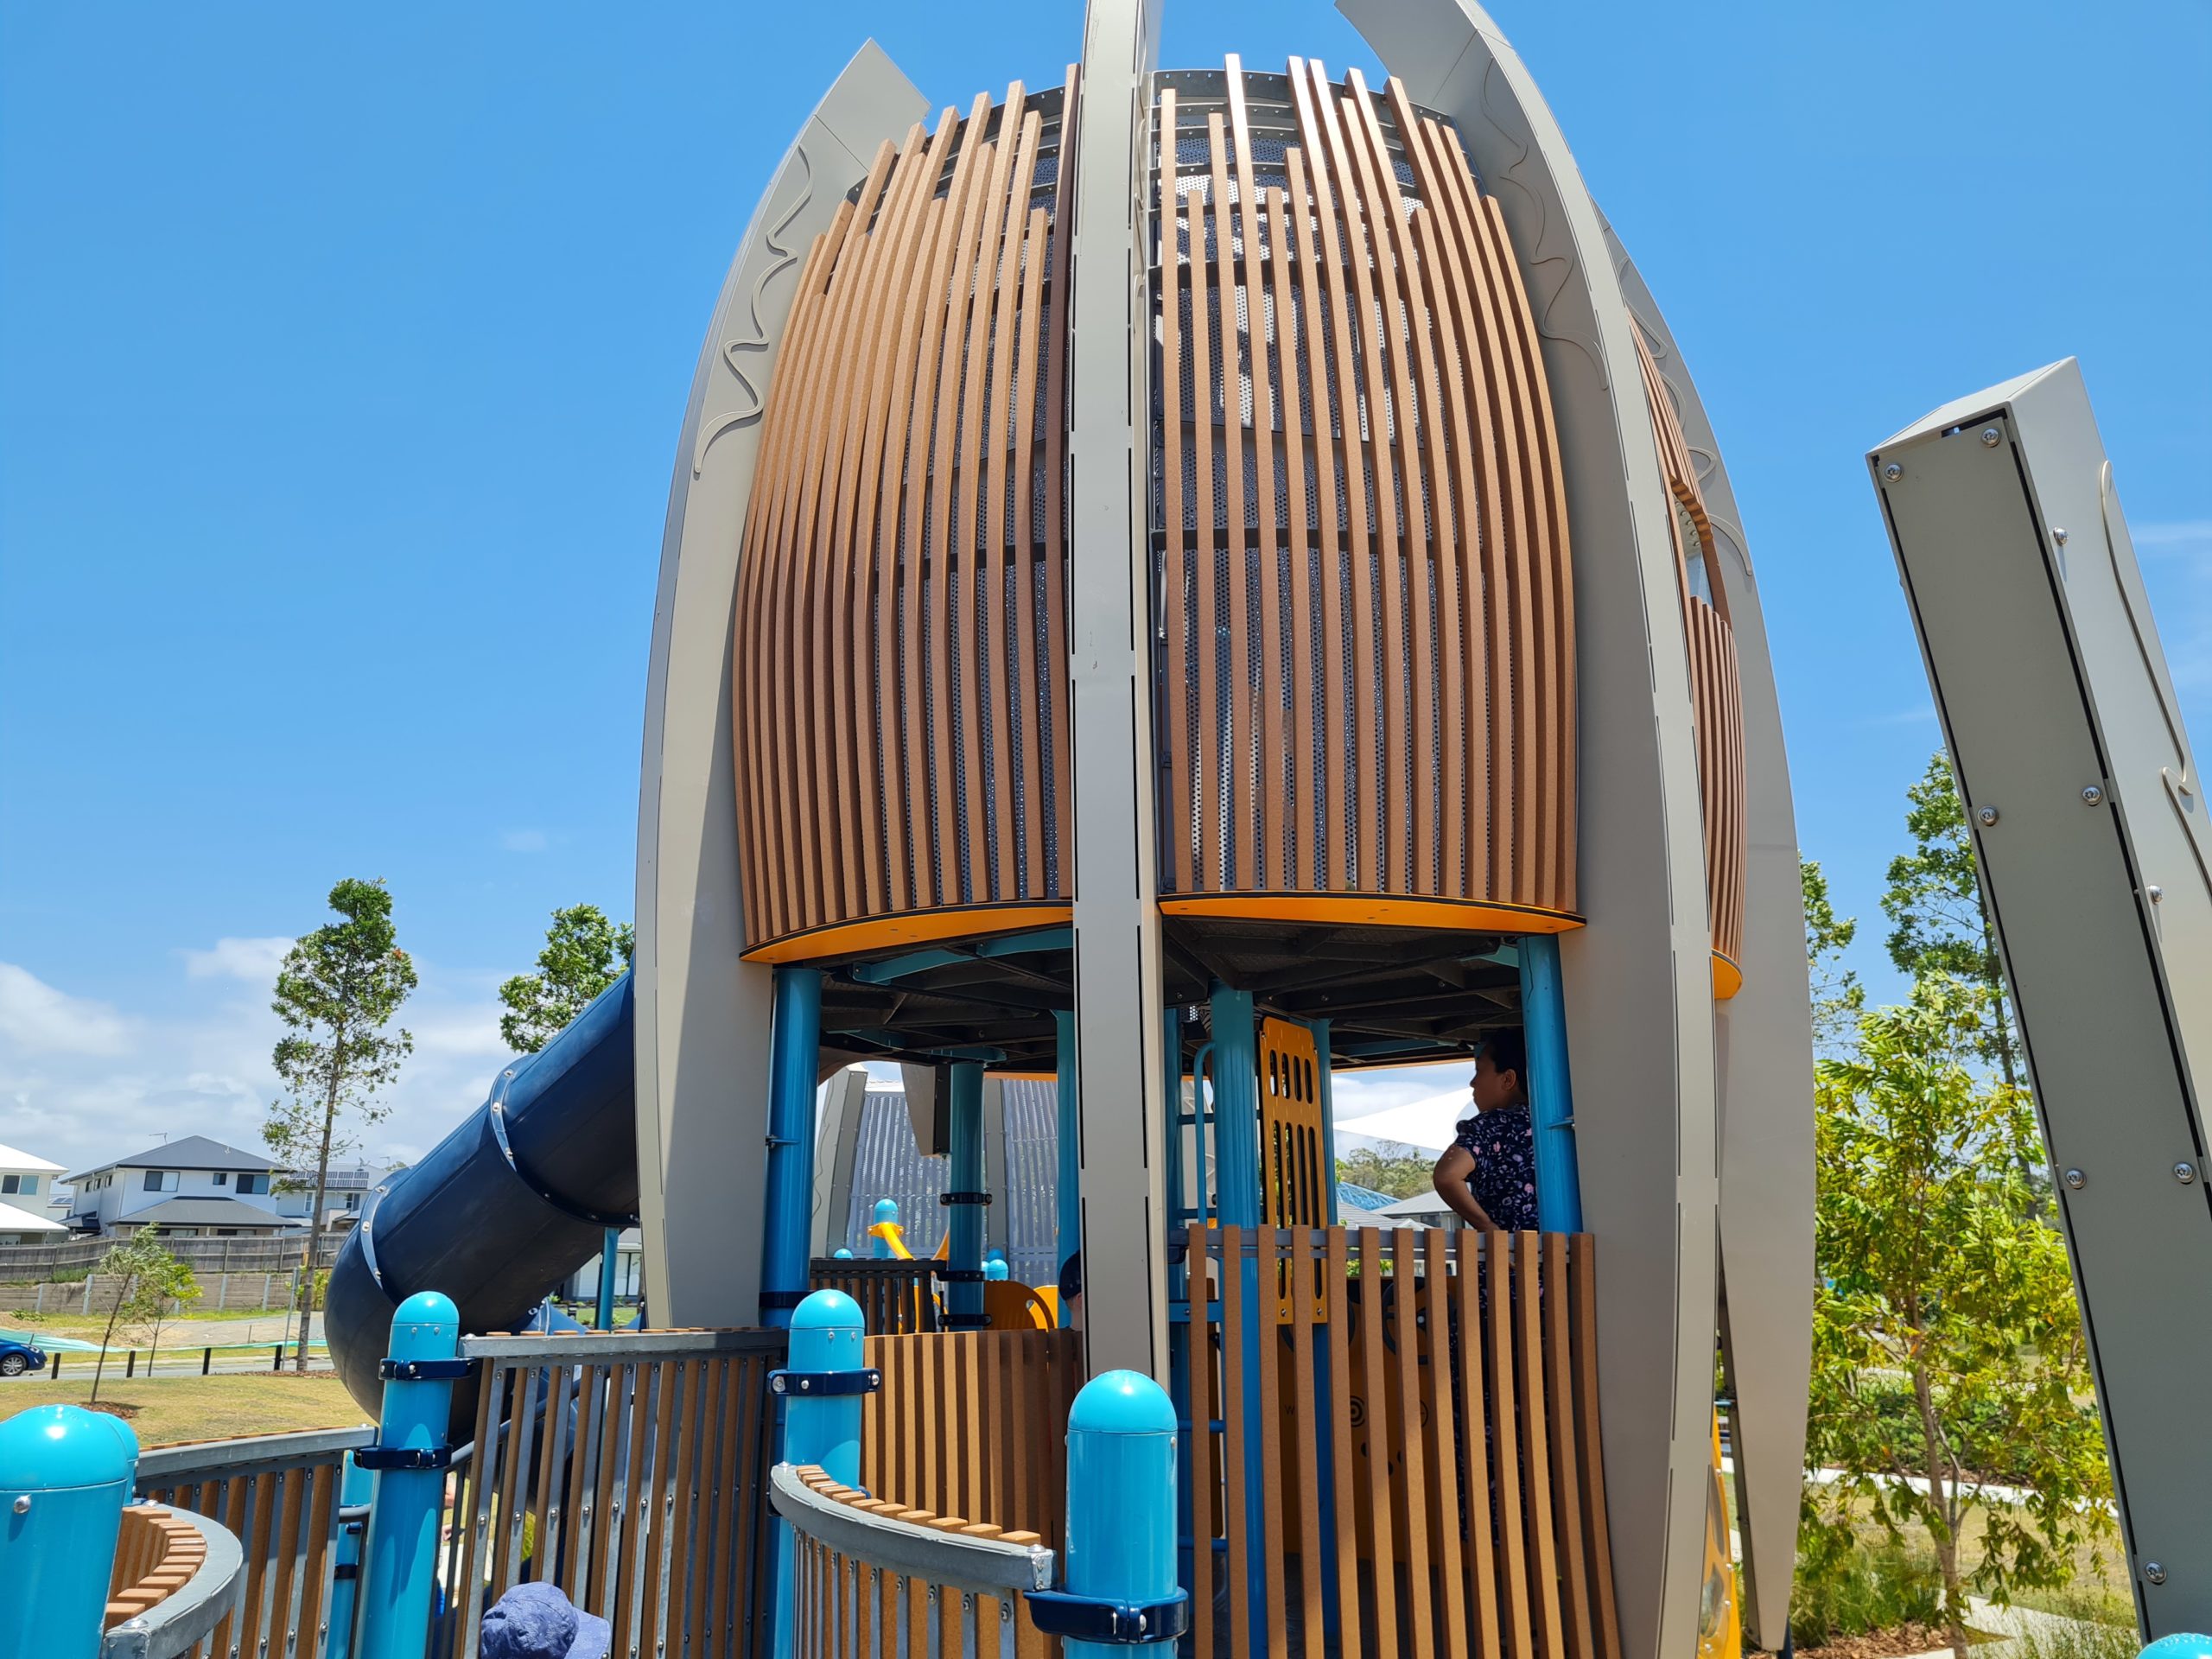 Well designed playground